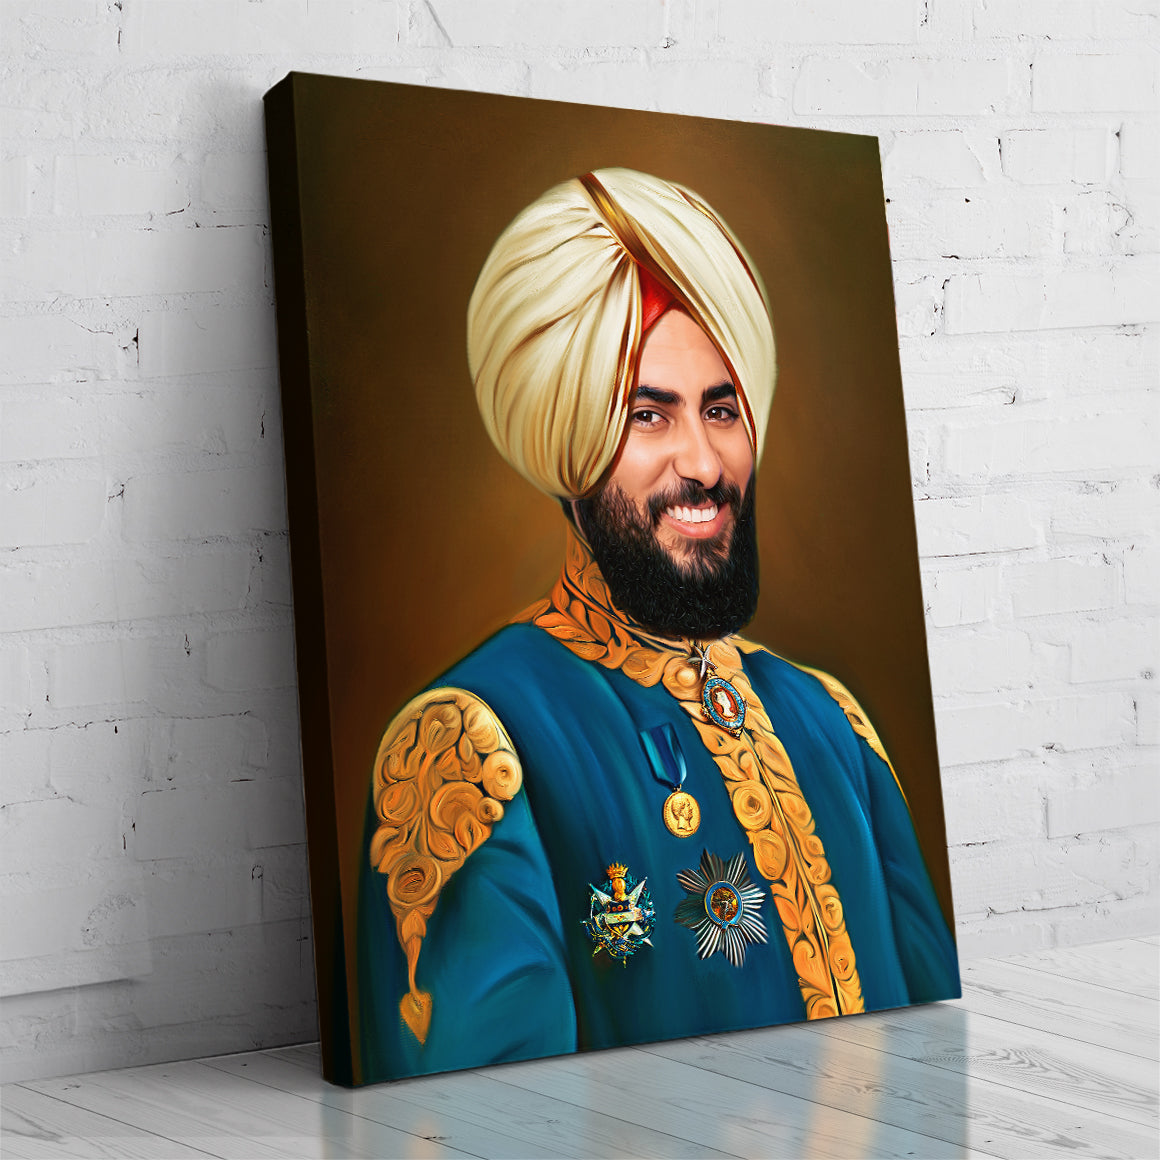 The Sikh